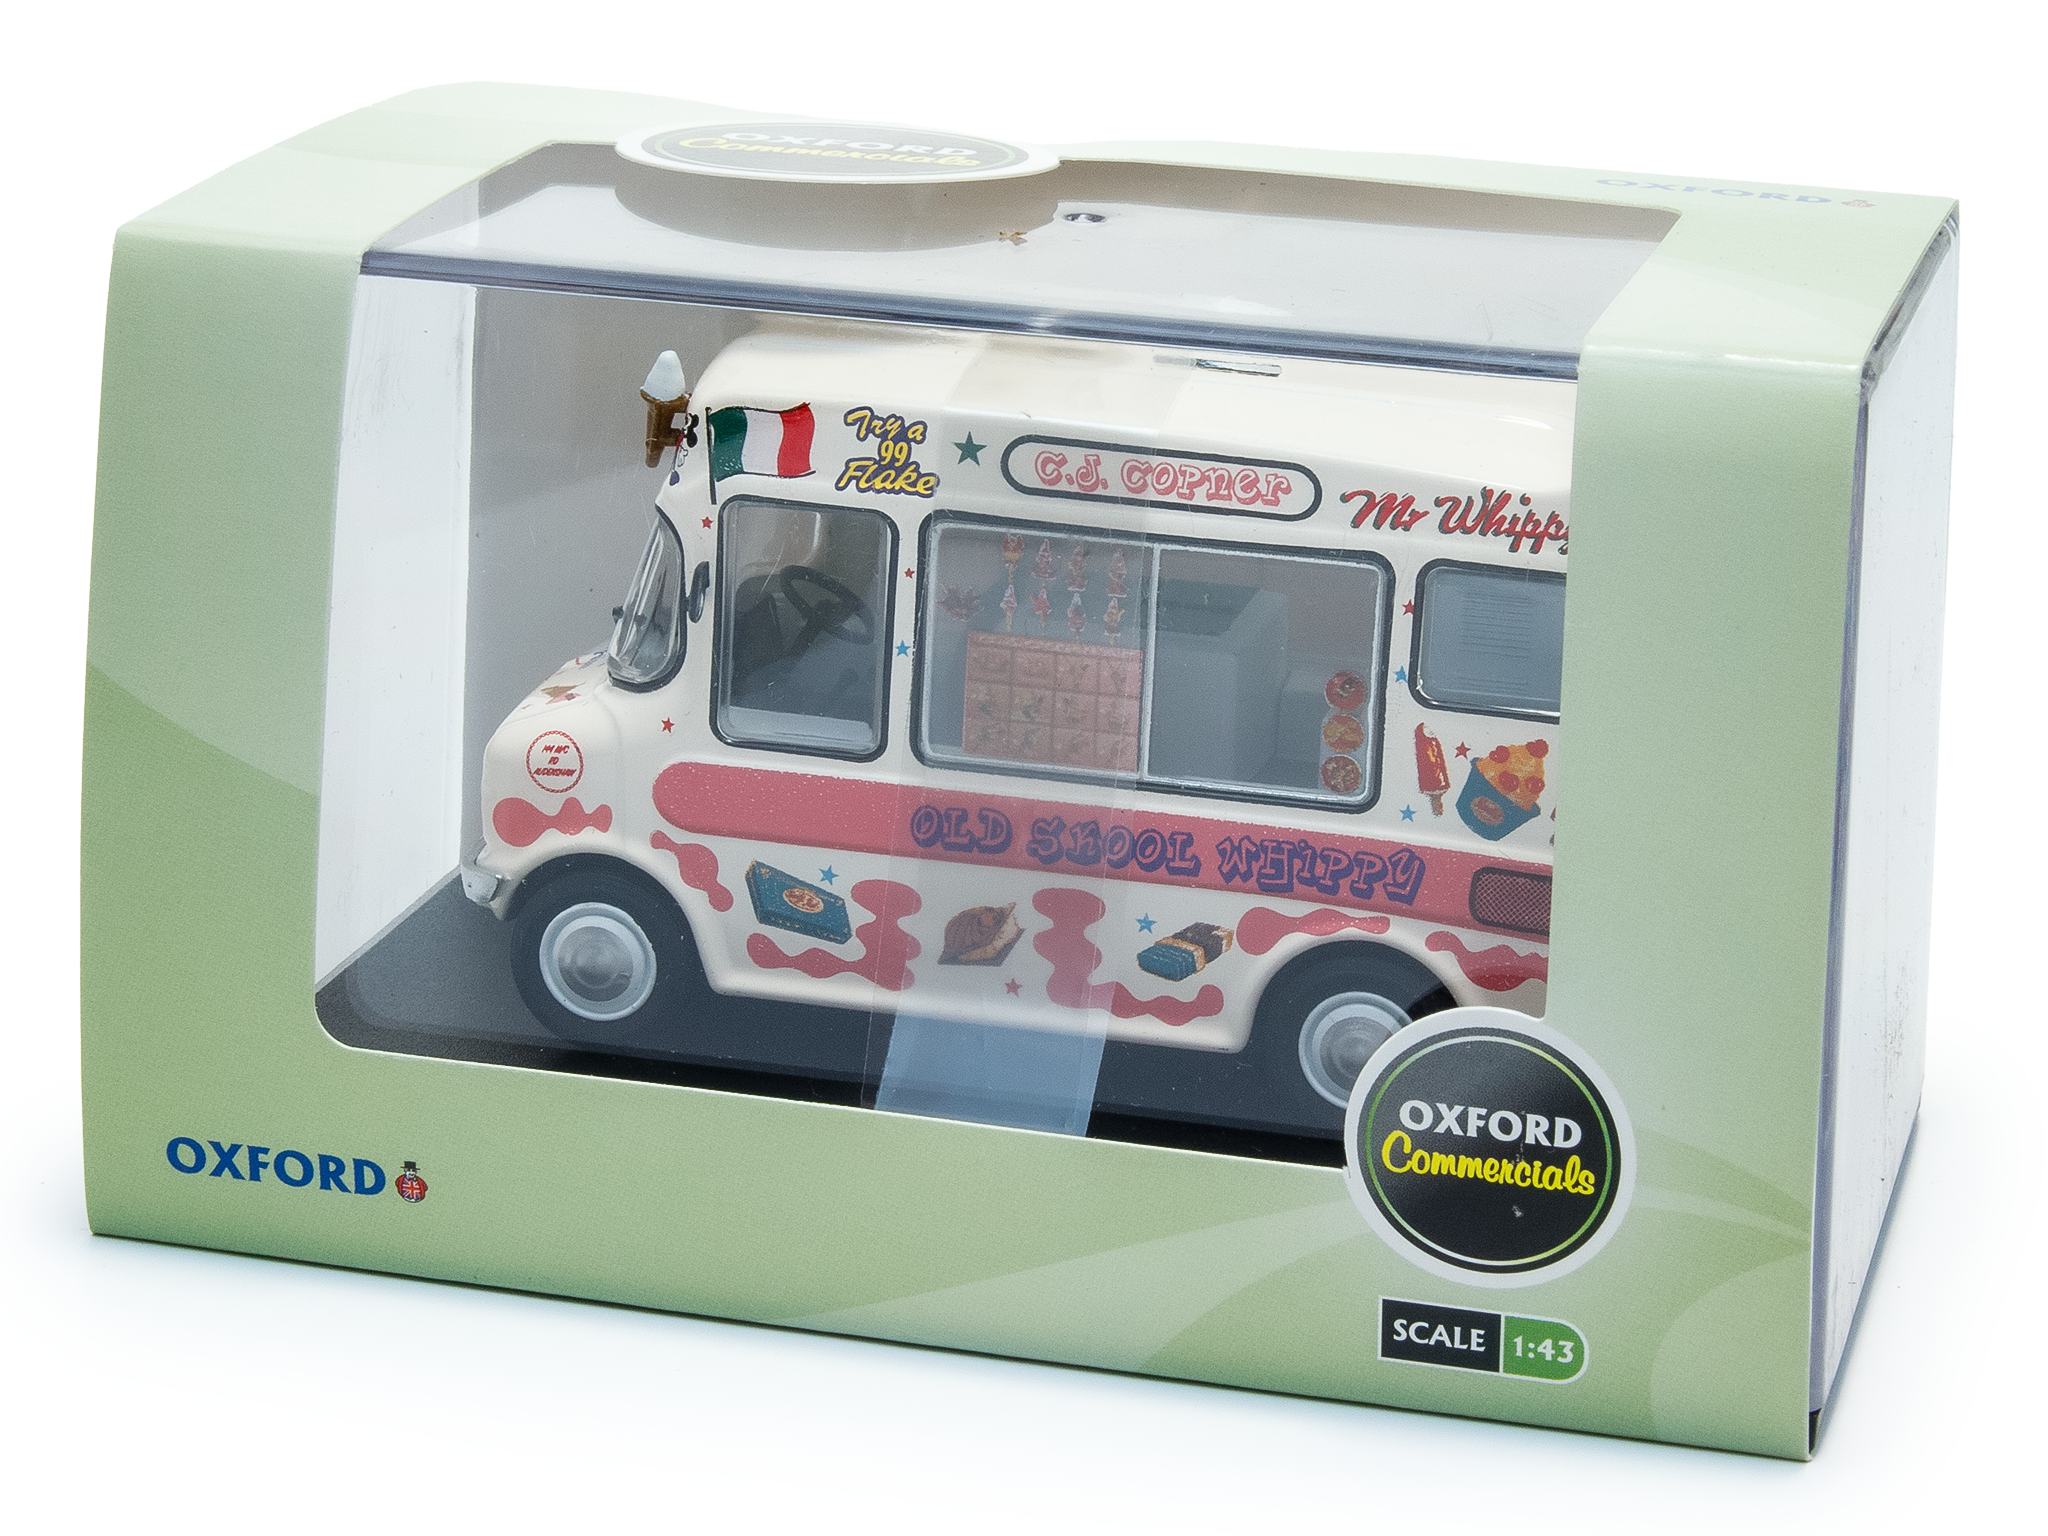 Bedford CF C J Copner Ice Cream Van - 1:43 Scale